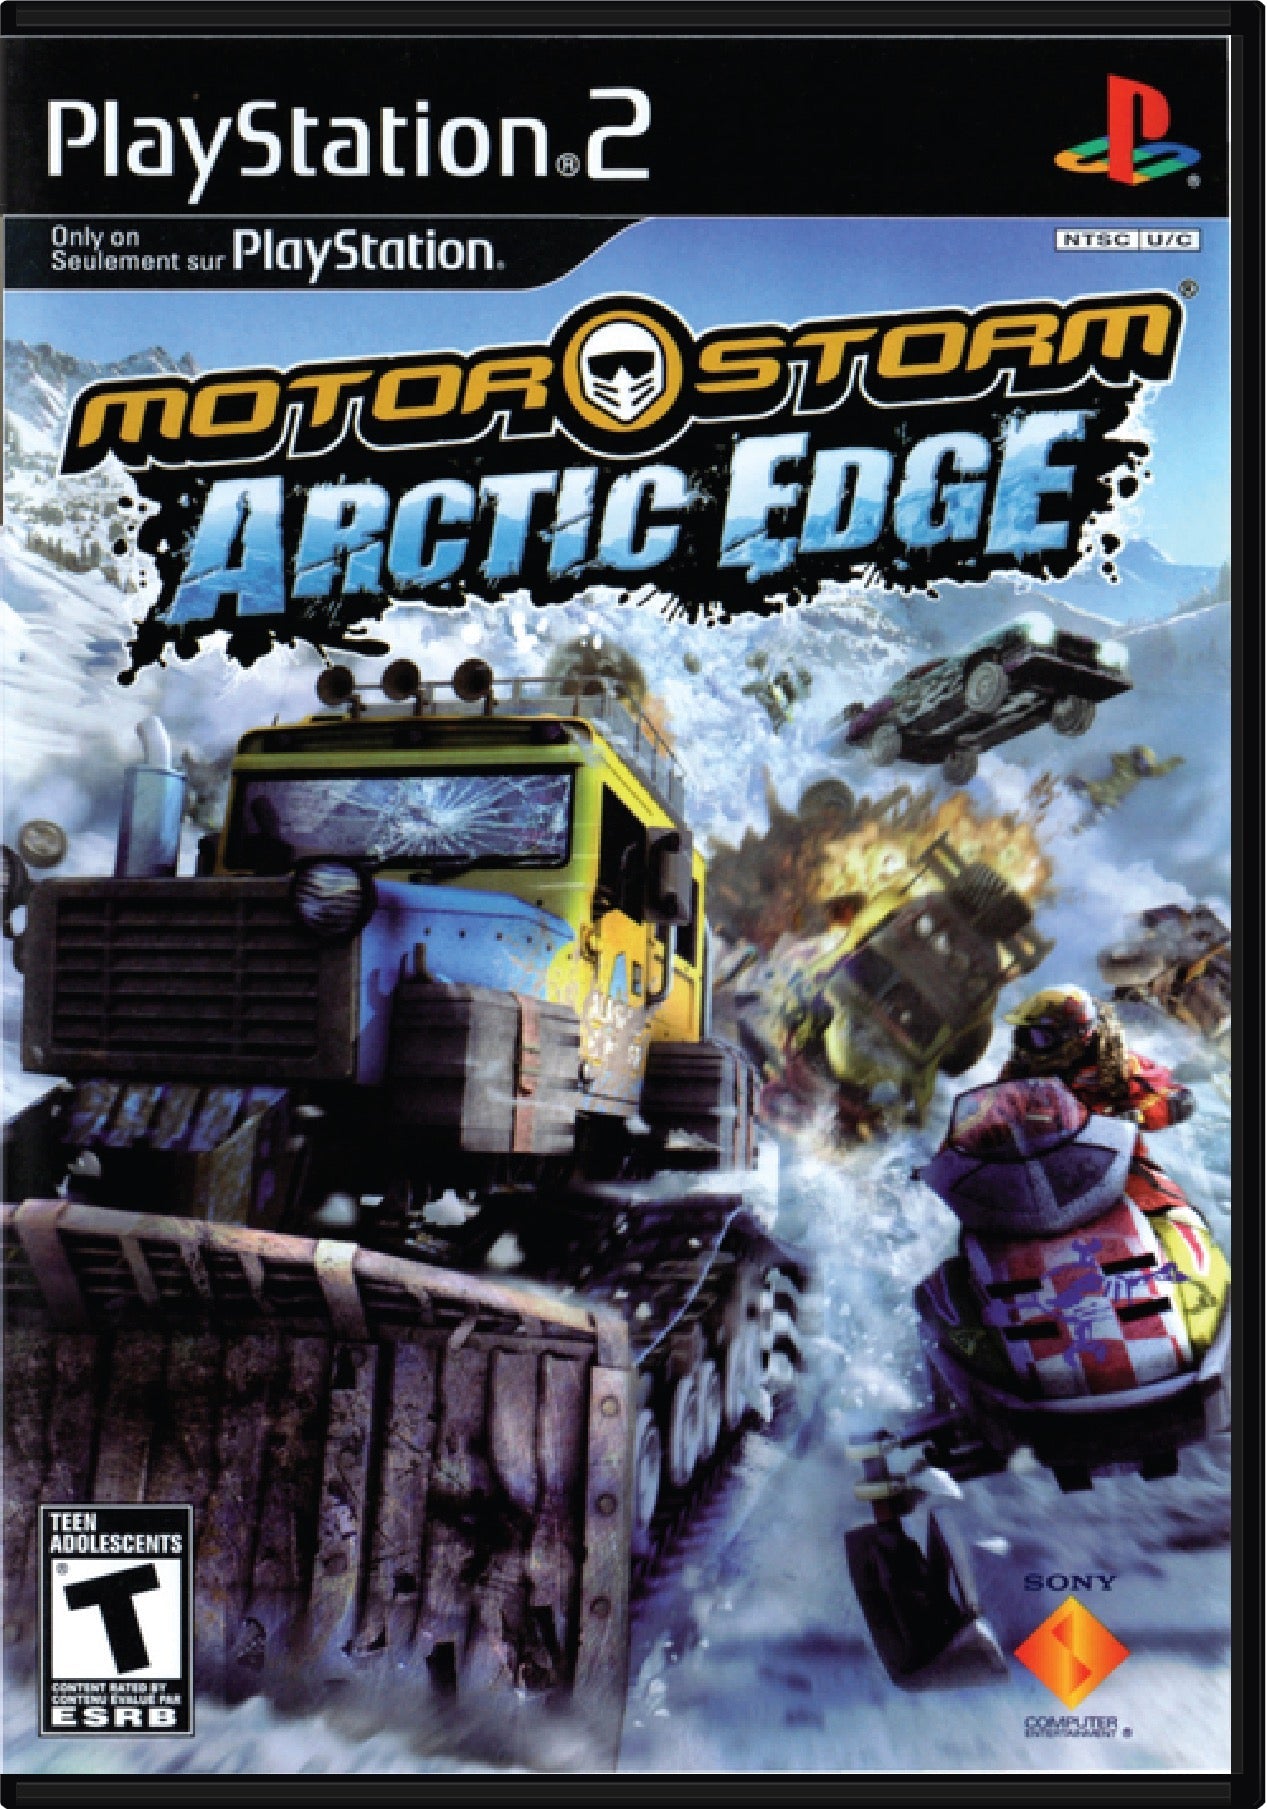 MotorStorm Arctic Edge Cover Art and Product Photo